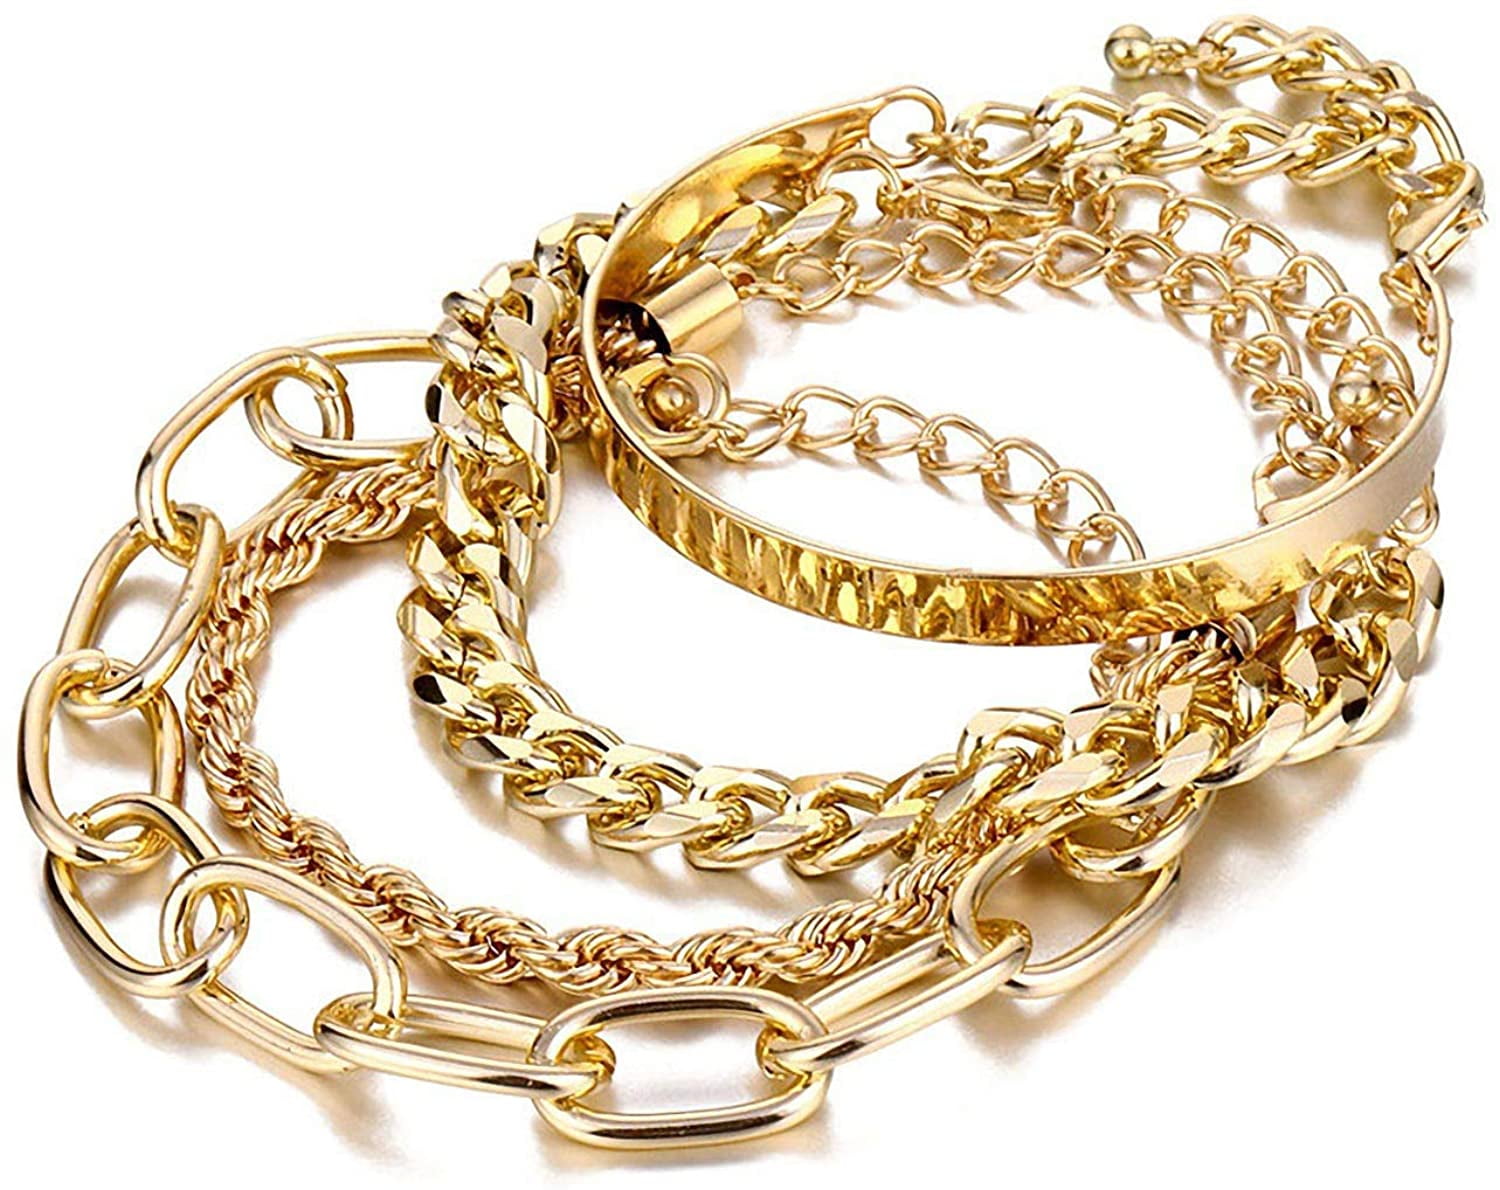 14K Gold Plated Dainty Adjustable Cuban Bead Bracelets Bangle for Women Girls Jewelry Gifts YBMYCM 3-8PCS Chain Link Bracelet for Women 